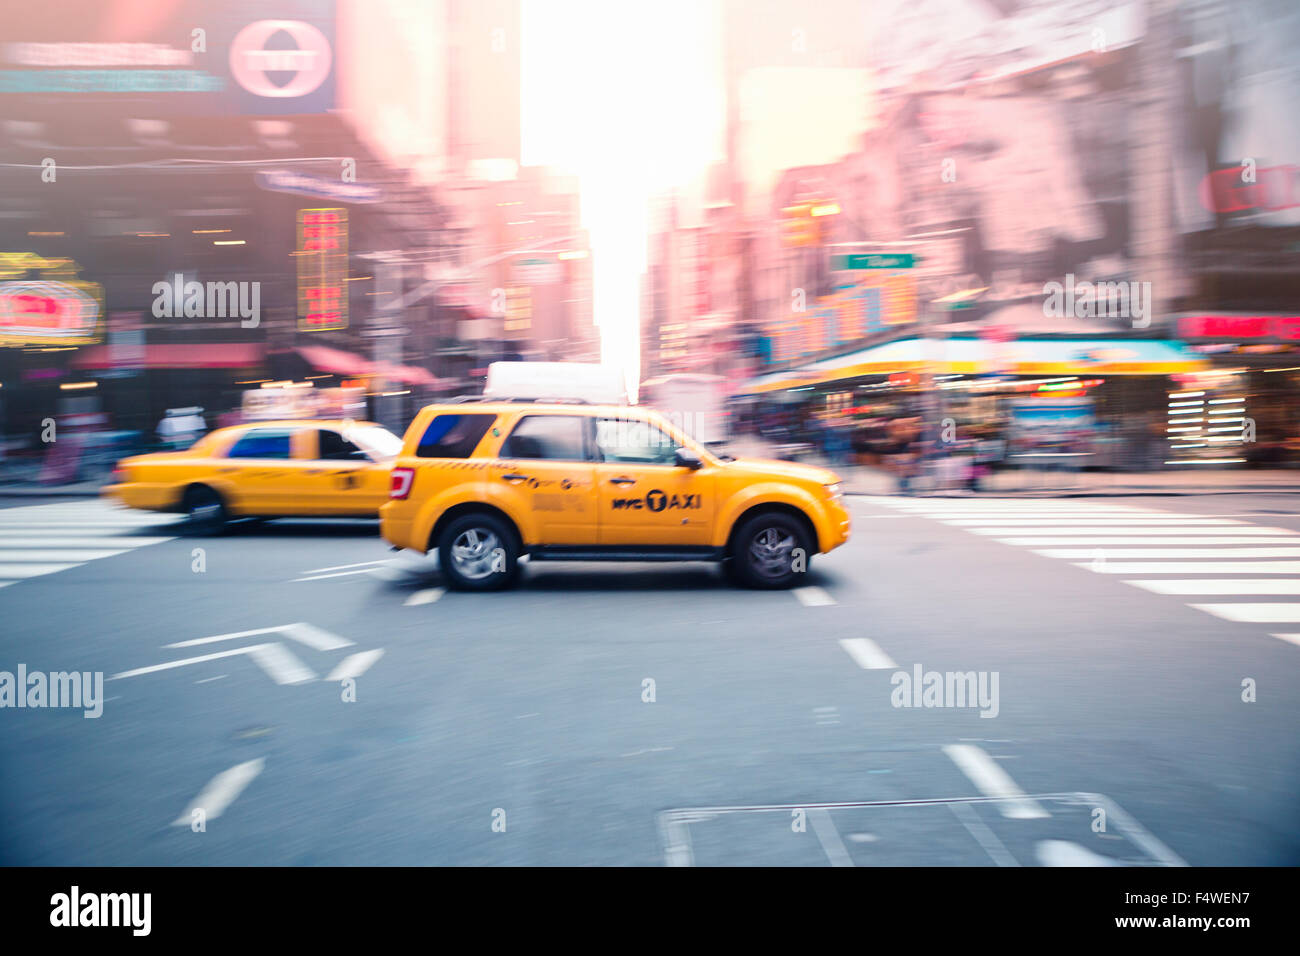 USA, New York State, New York City, Manhattan, Yellow taxi in traffic Stock Photo